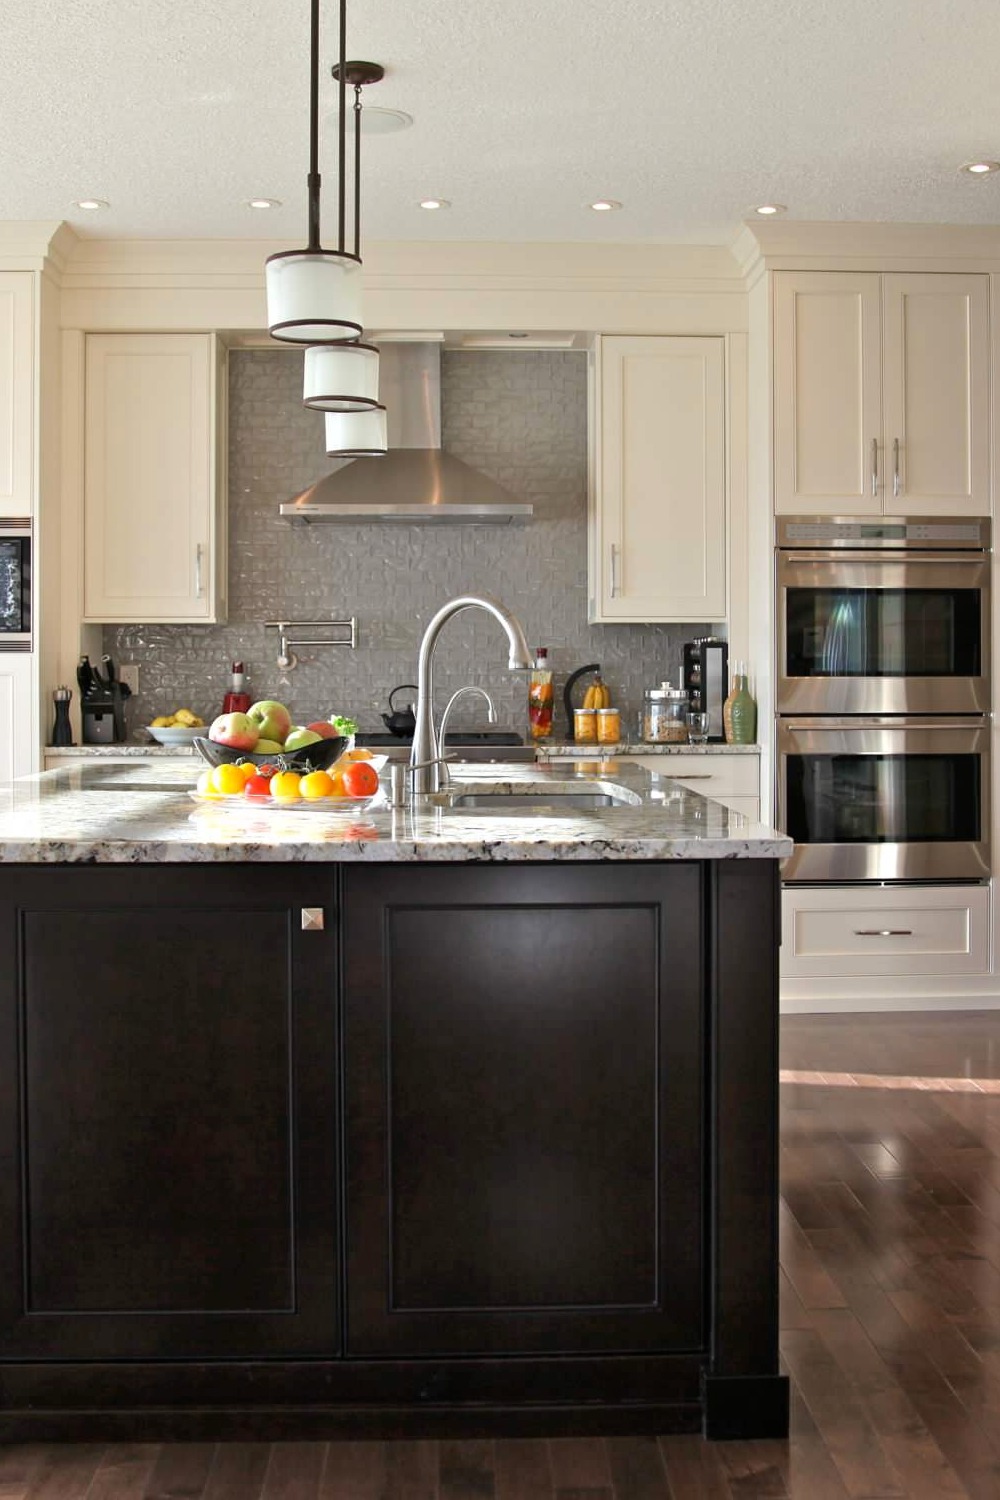 Gray Backsplash Tiles Two Tones Kitchen Cabinets Granite Countertops Dark Hardwood